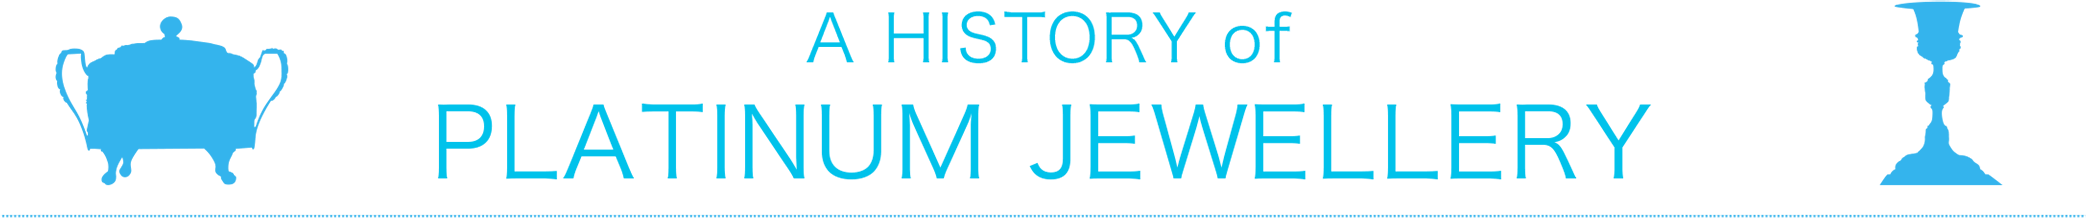 A HISTORY of PLATINUM JEWELLERY